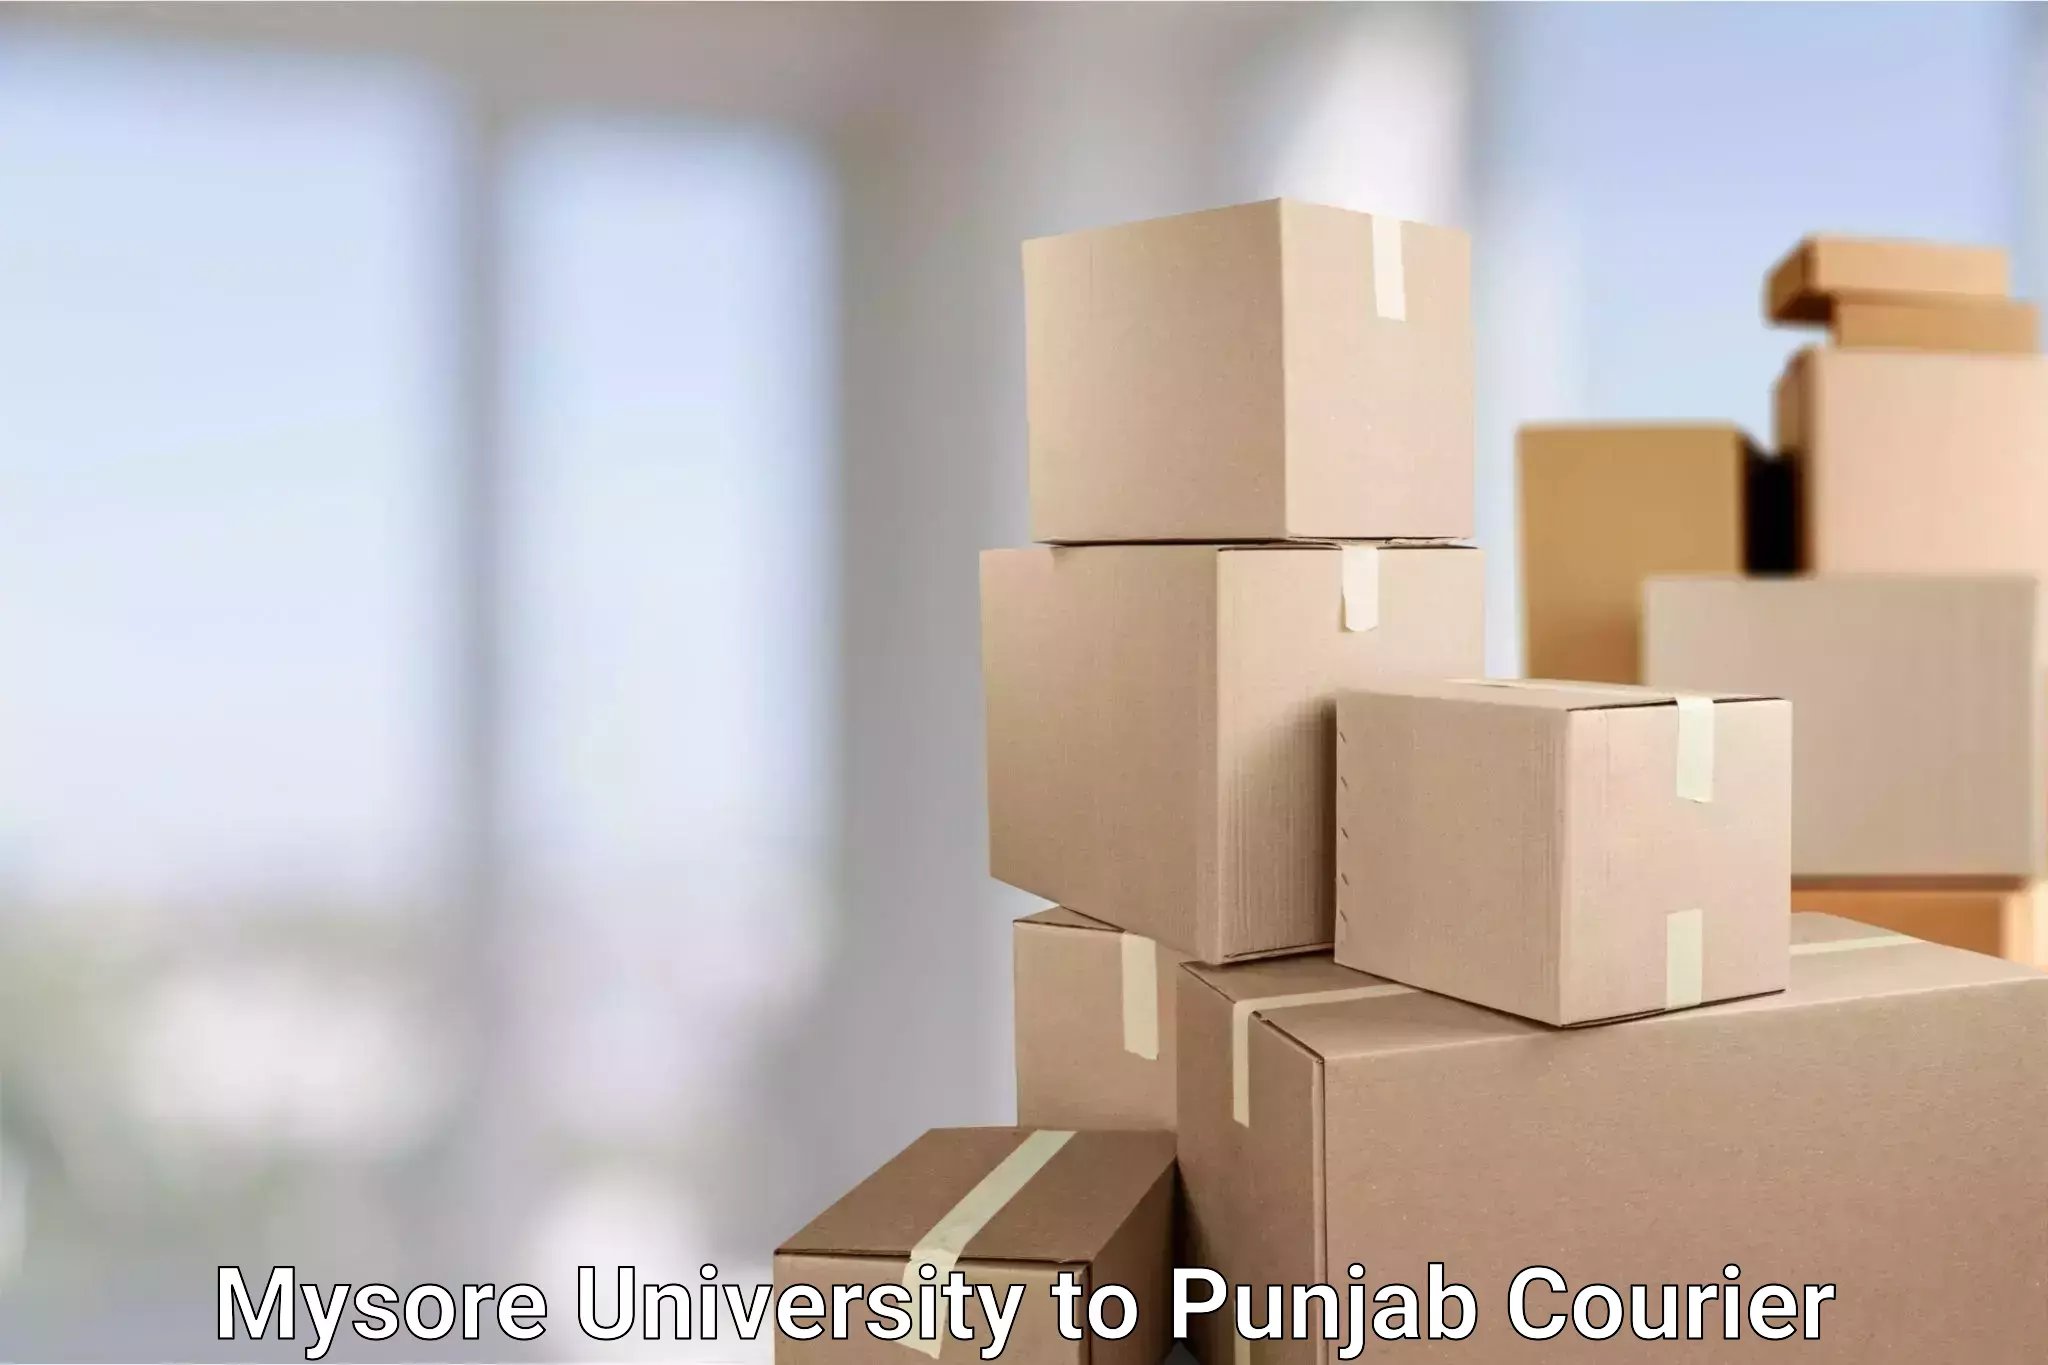 Courier tracking online Mysore University to Punjab